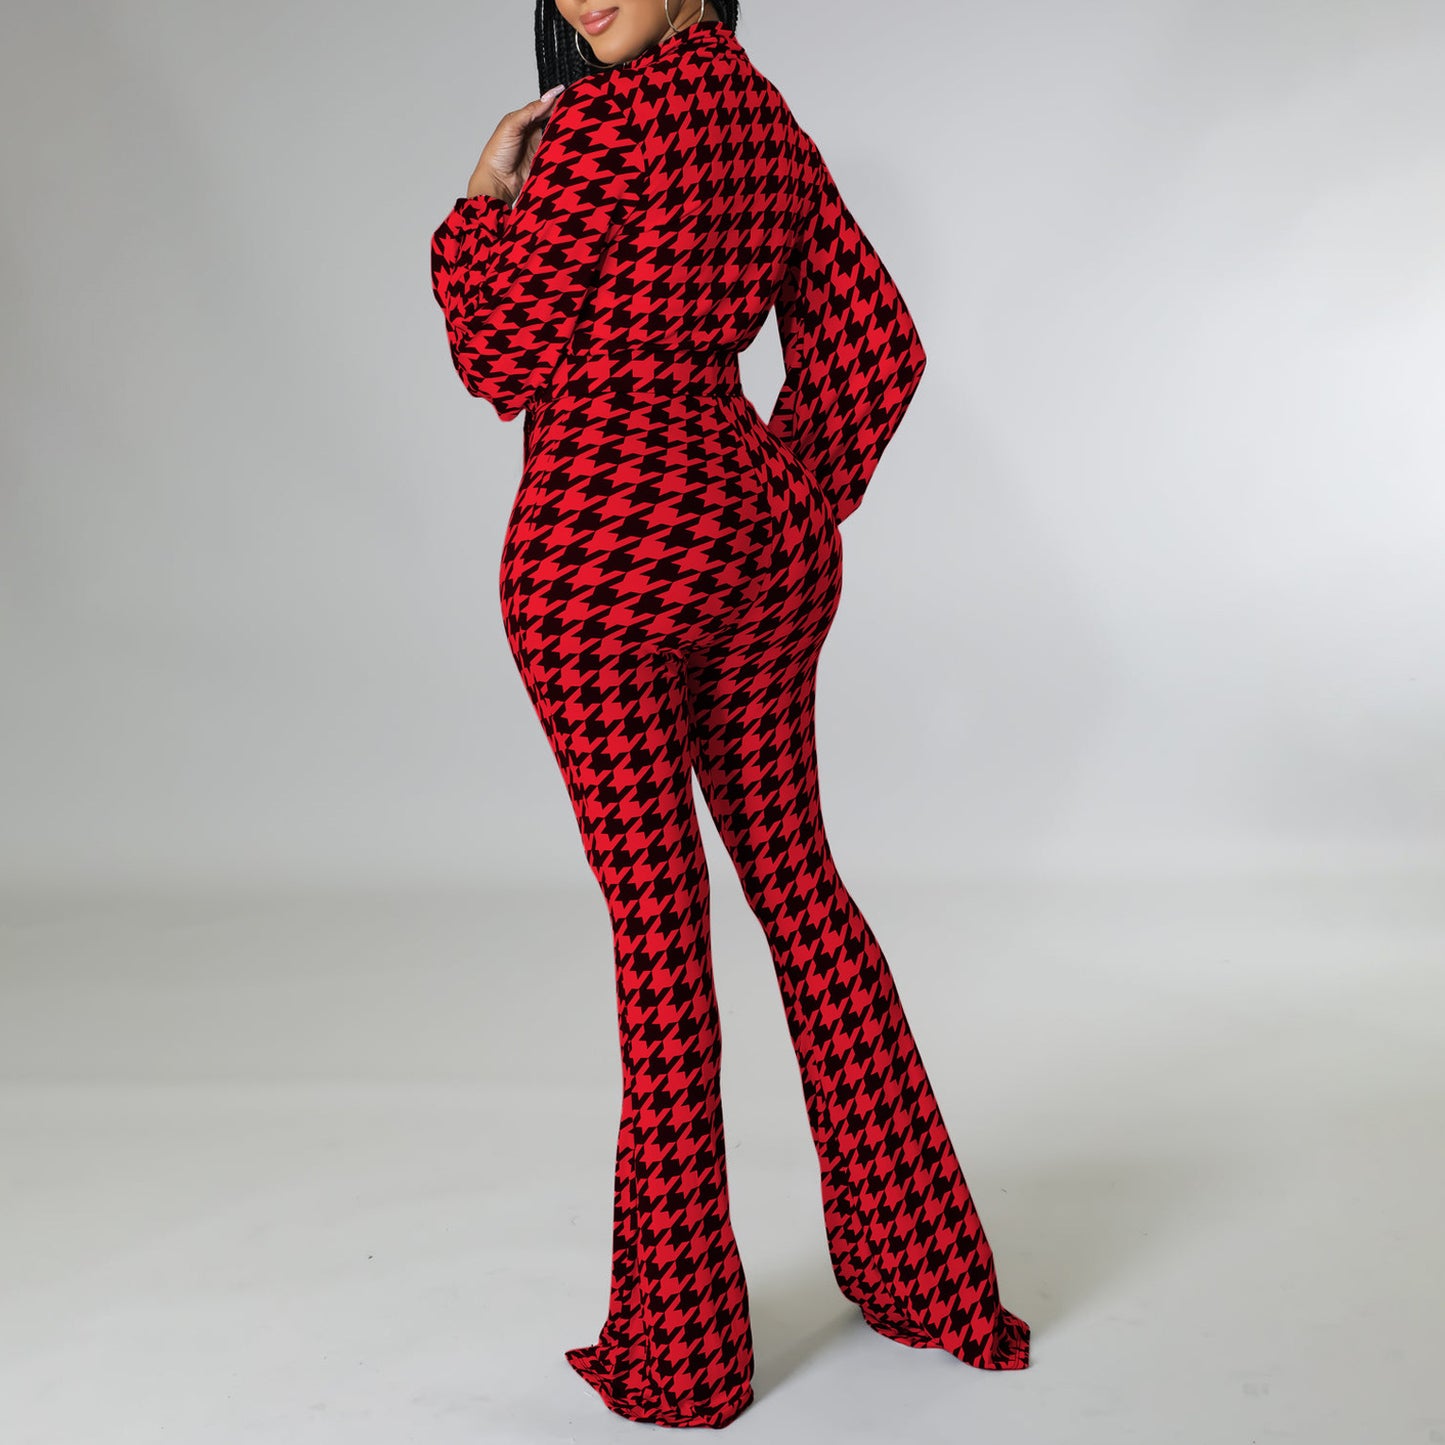 Damenbekleidung Herbst Winter V-Ausschnitt Puffärmel Taillenbesatz Druck Weites Bein Afrikanischer Overall